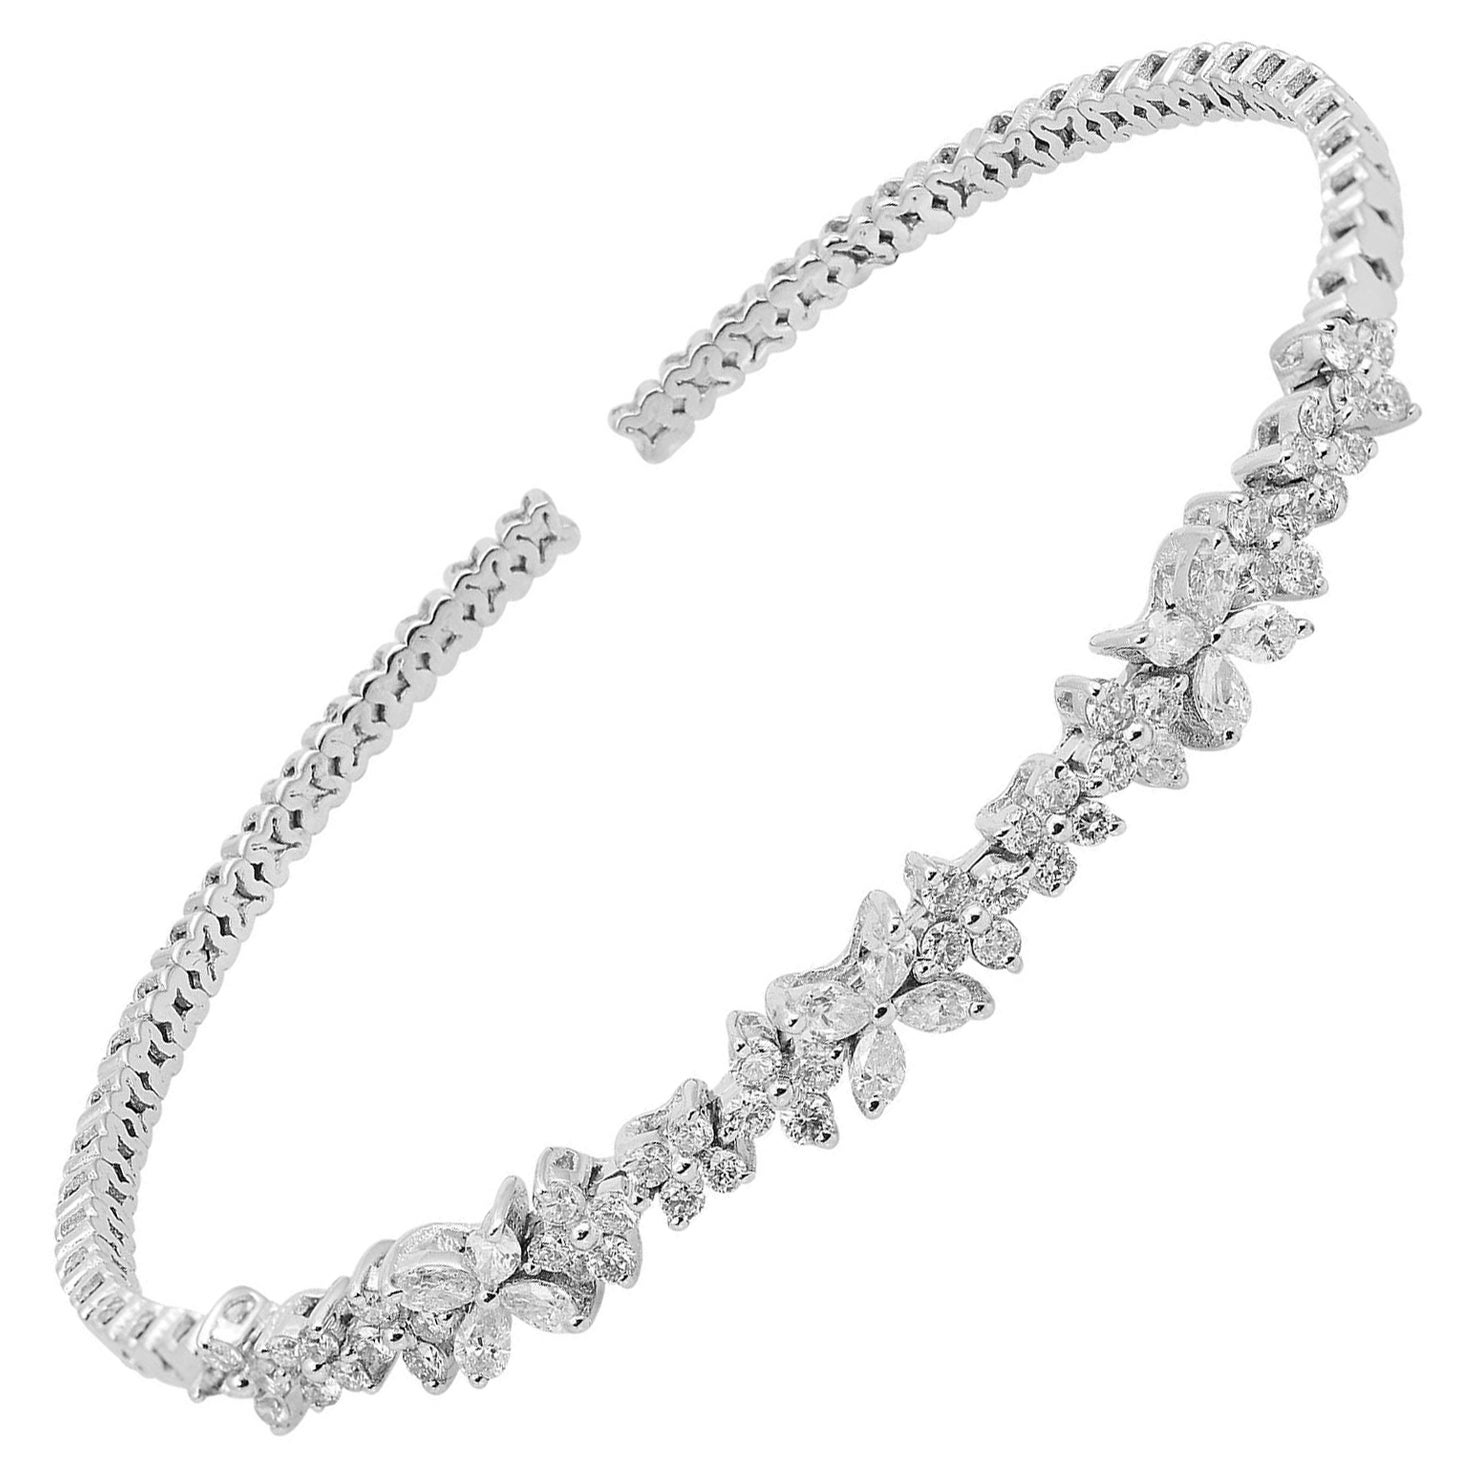 1.30ct Pear Round Diamond Cuff Bangle Bracelet 18 Karat White Gold Jewelry